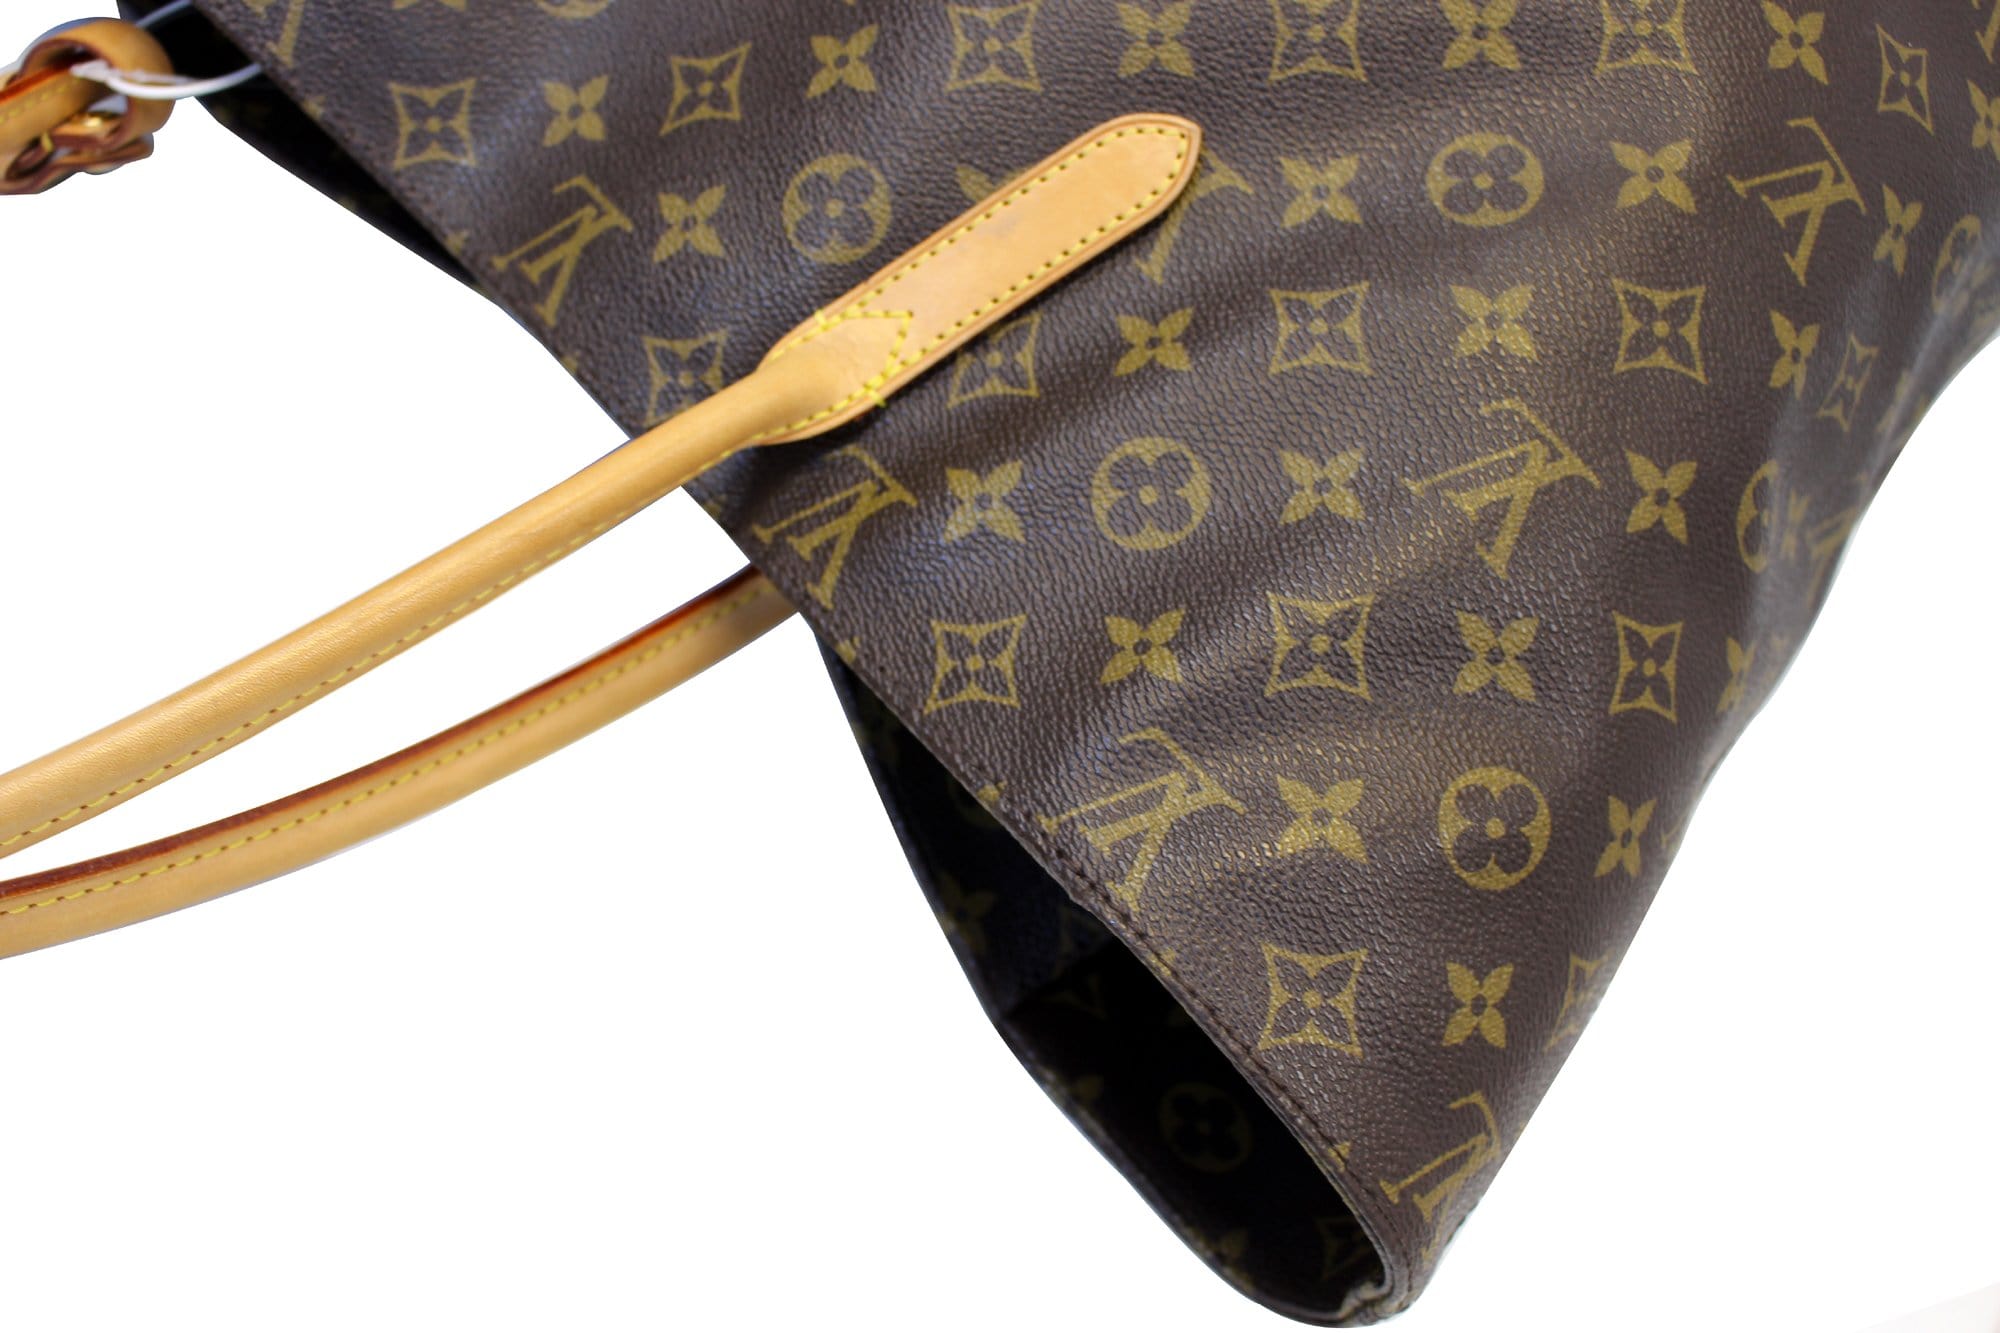 Louis Vuitton Raspail M51372 Monogram Canvas Shoulder Bag Brown Gold